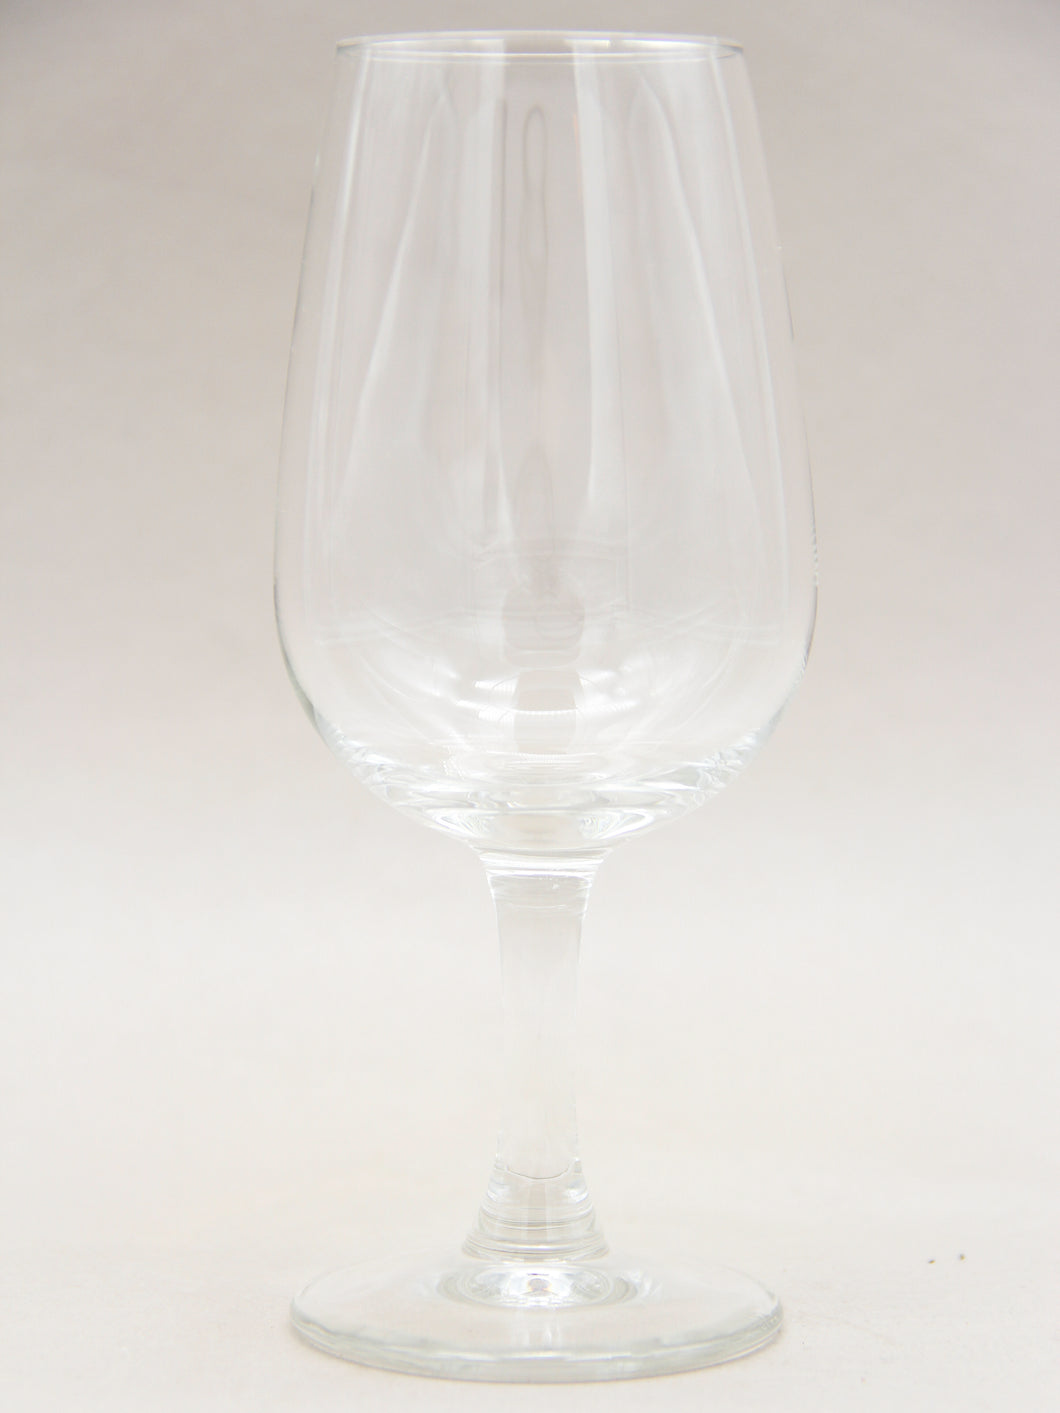 Royal Leerdam, Tasting Glass with Stem, 22cl